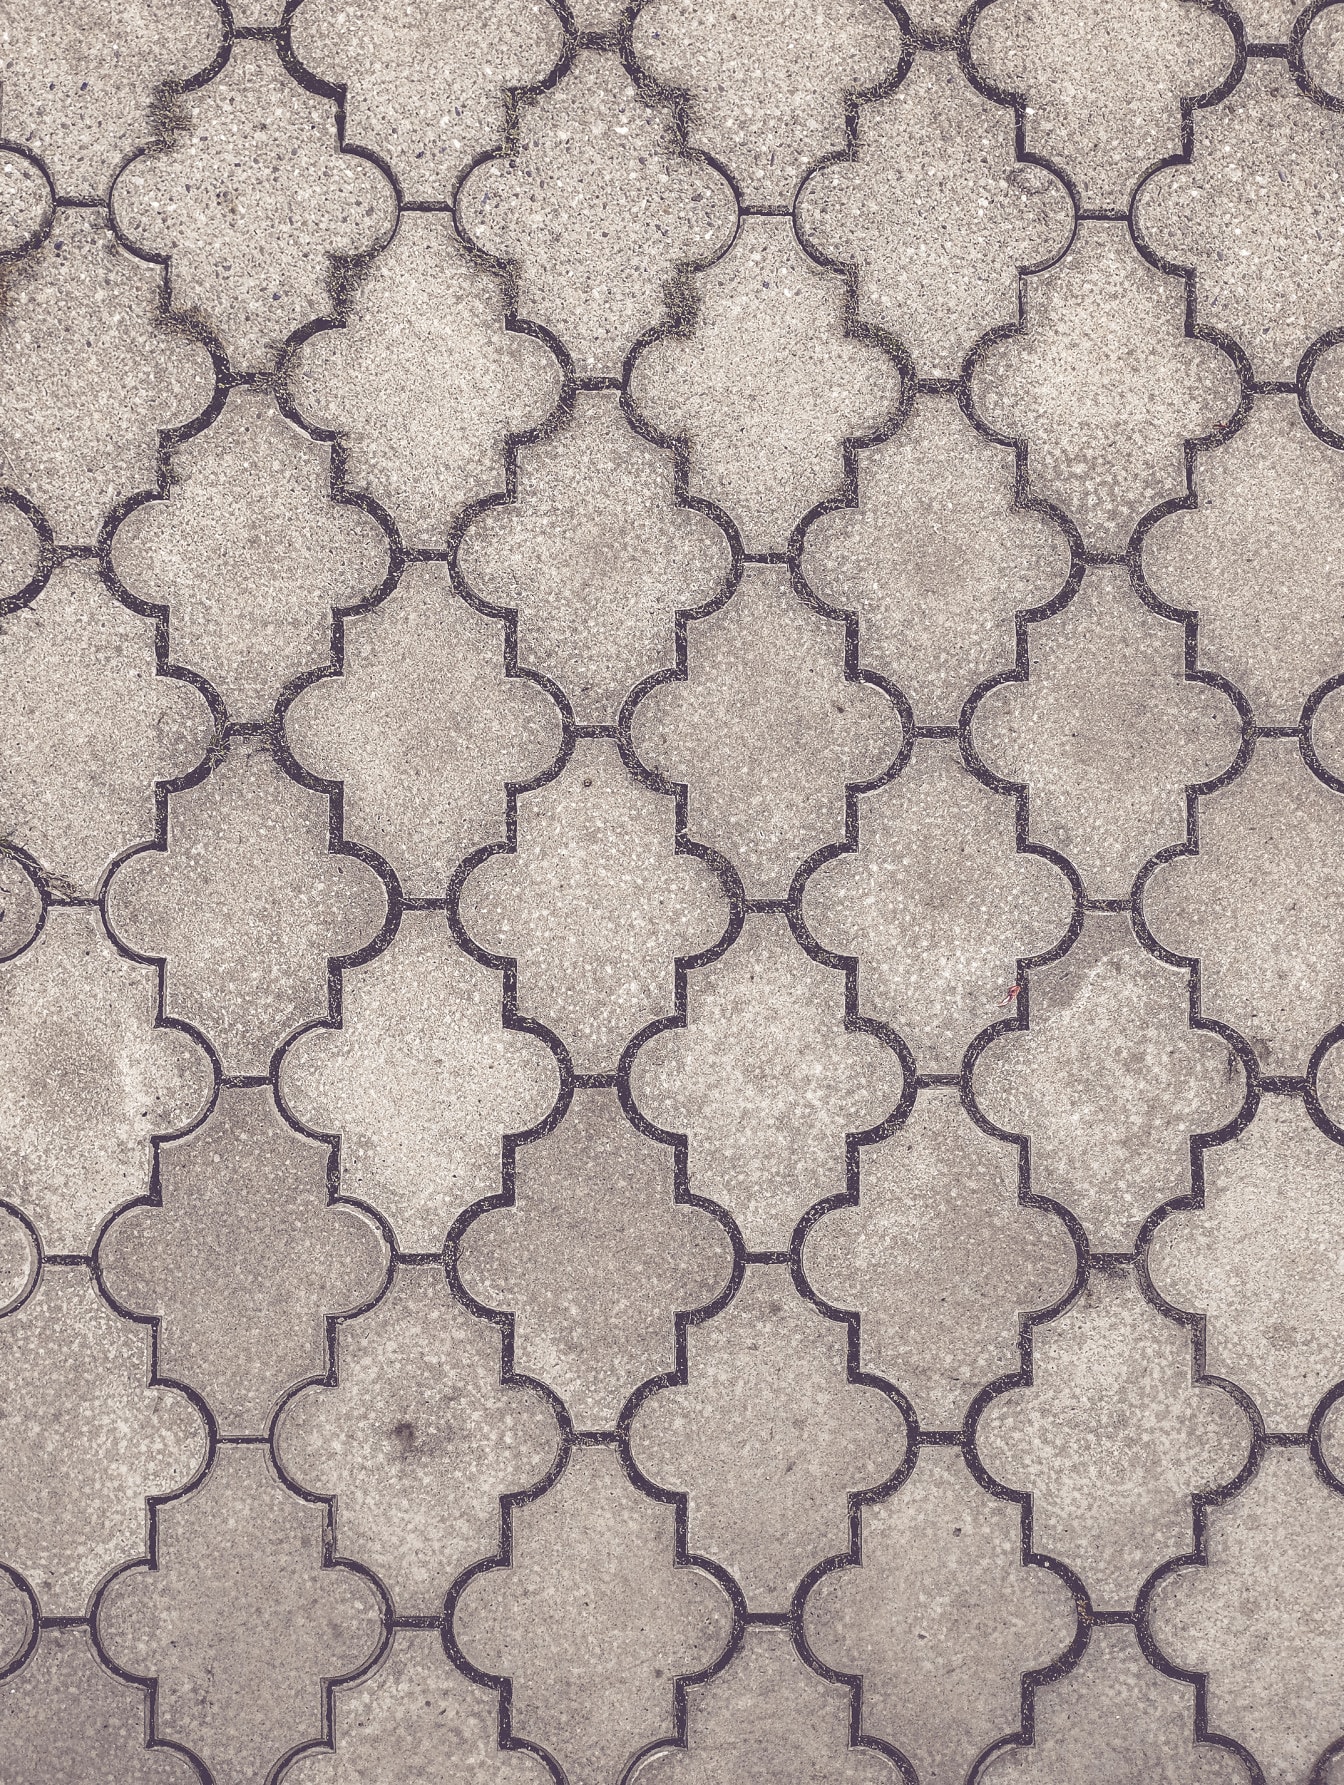 Grey concrete pavement surface texture on ground